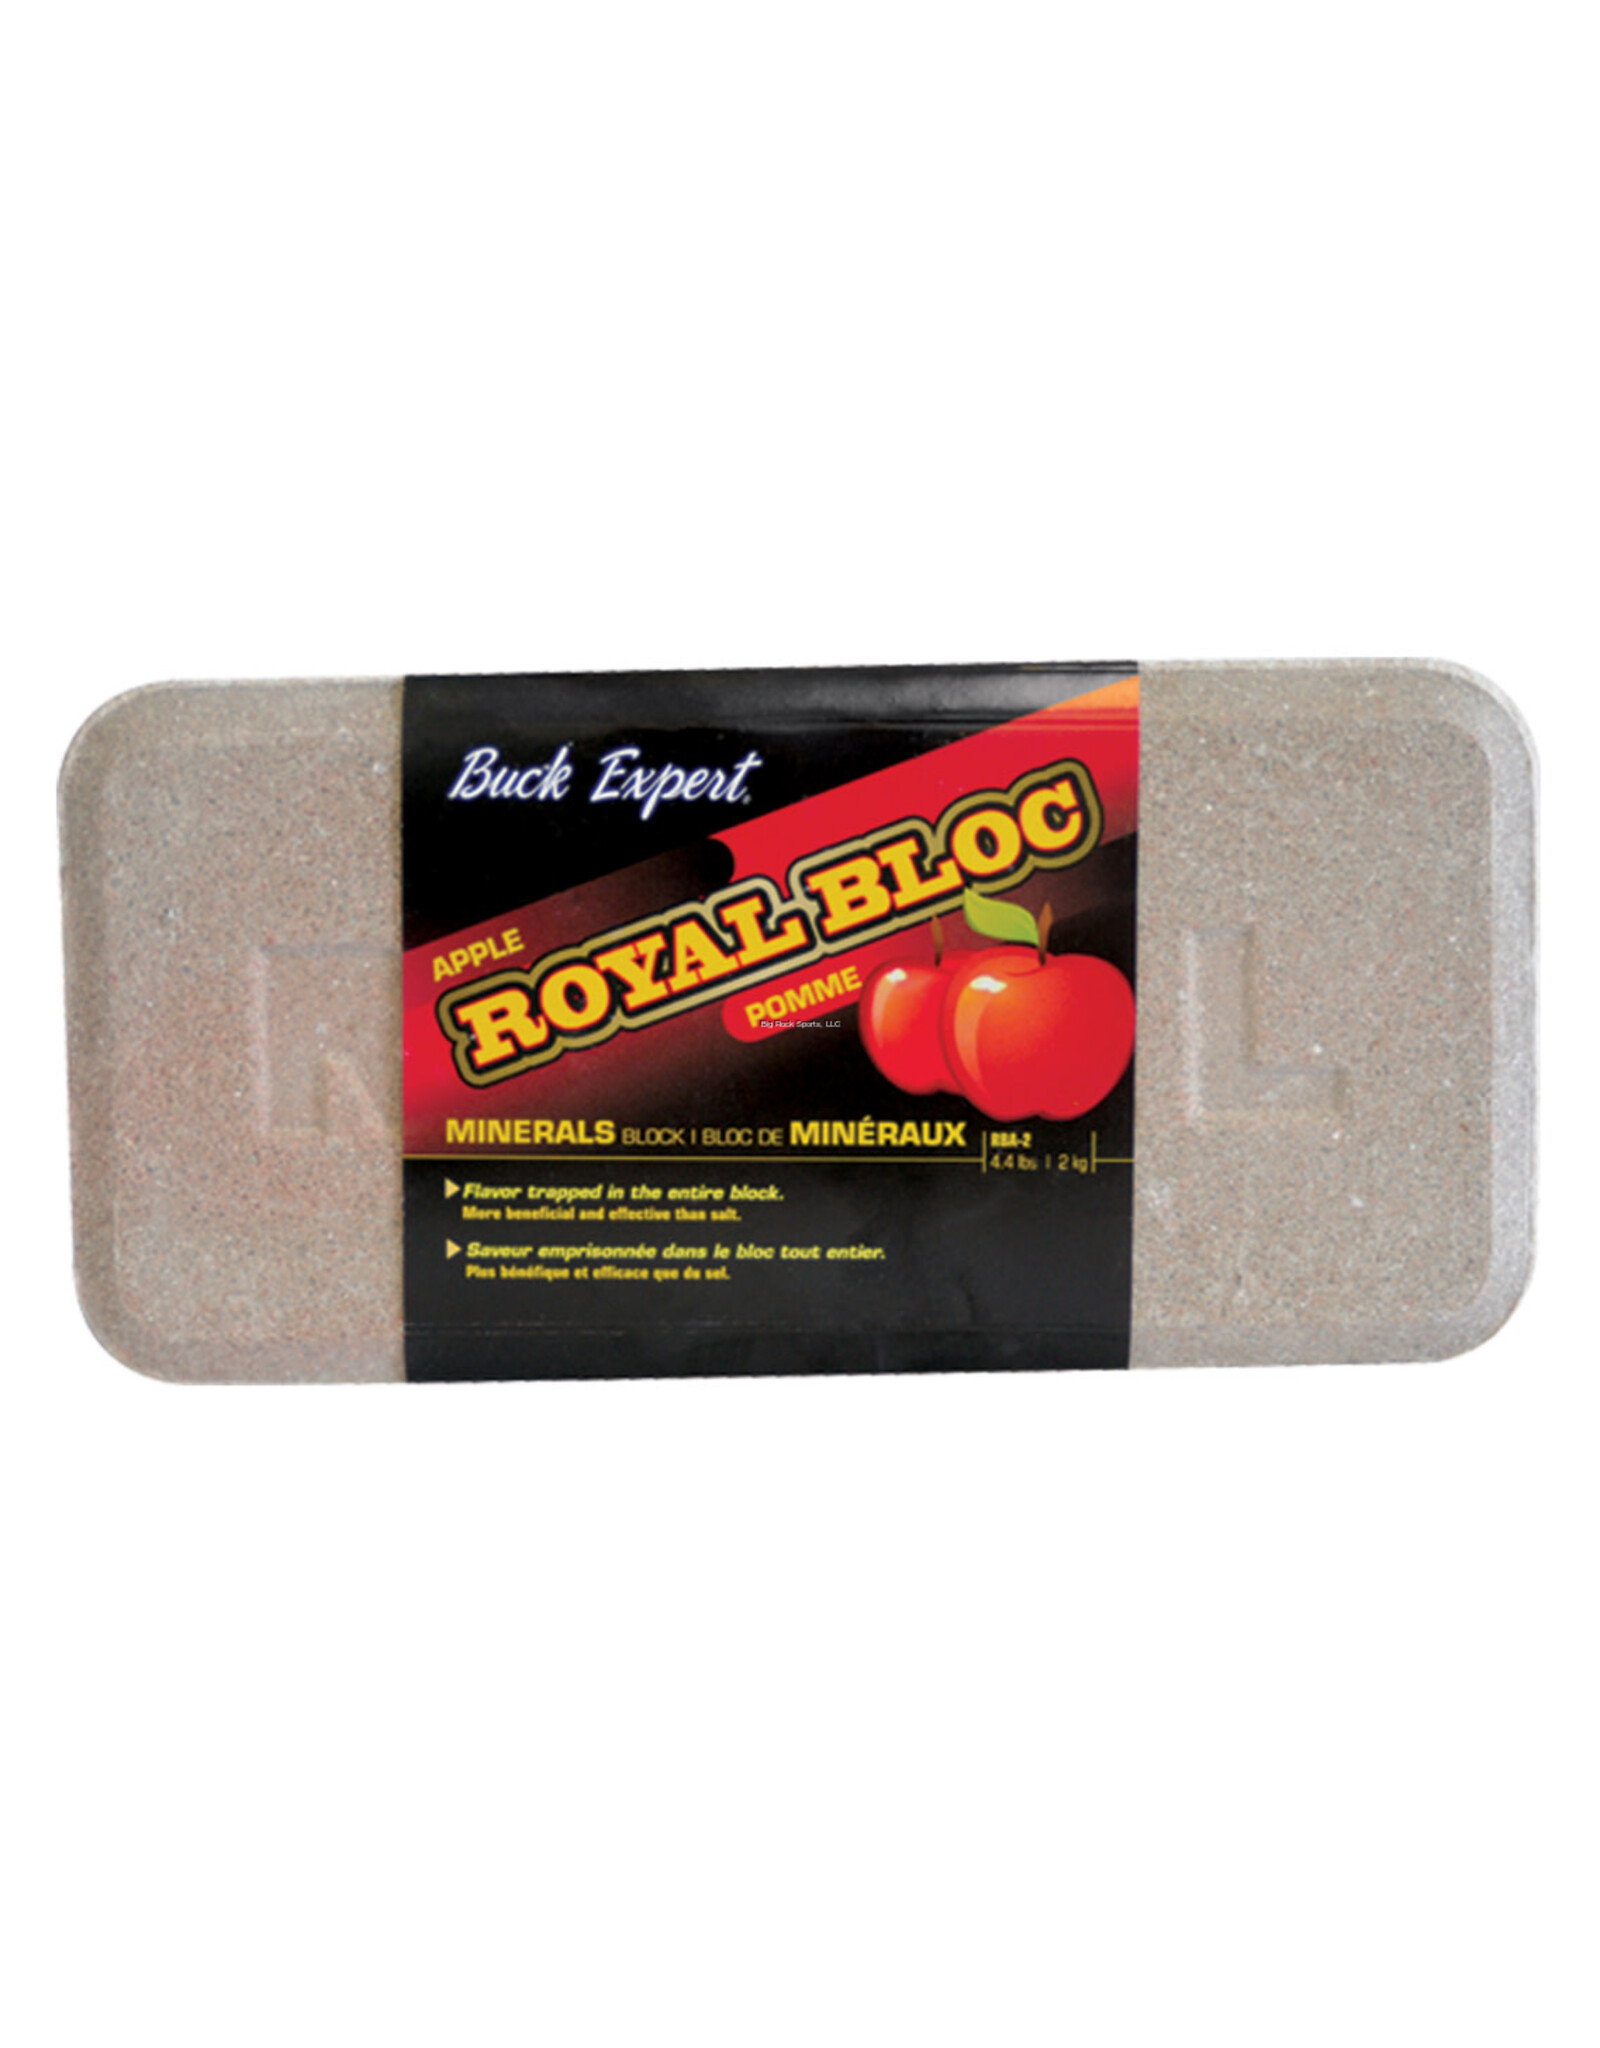 Buck Expert Royal Bloc - Flavored Mineral Block /APPLE - 4,4lb/2kg